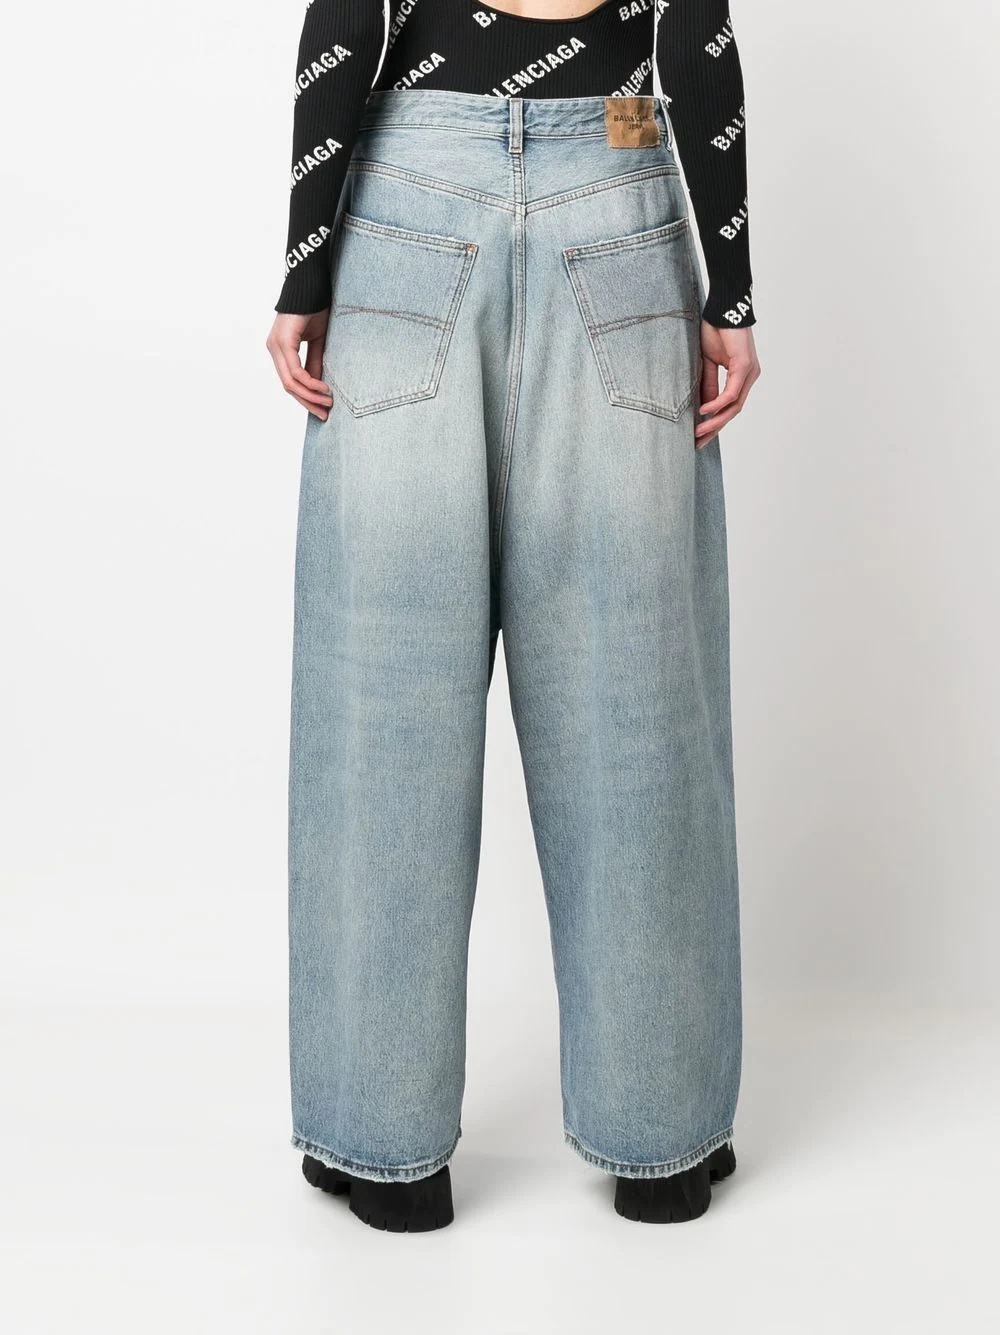 Low-crotch wide-leg jeans